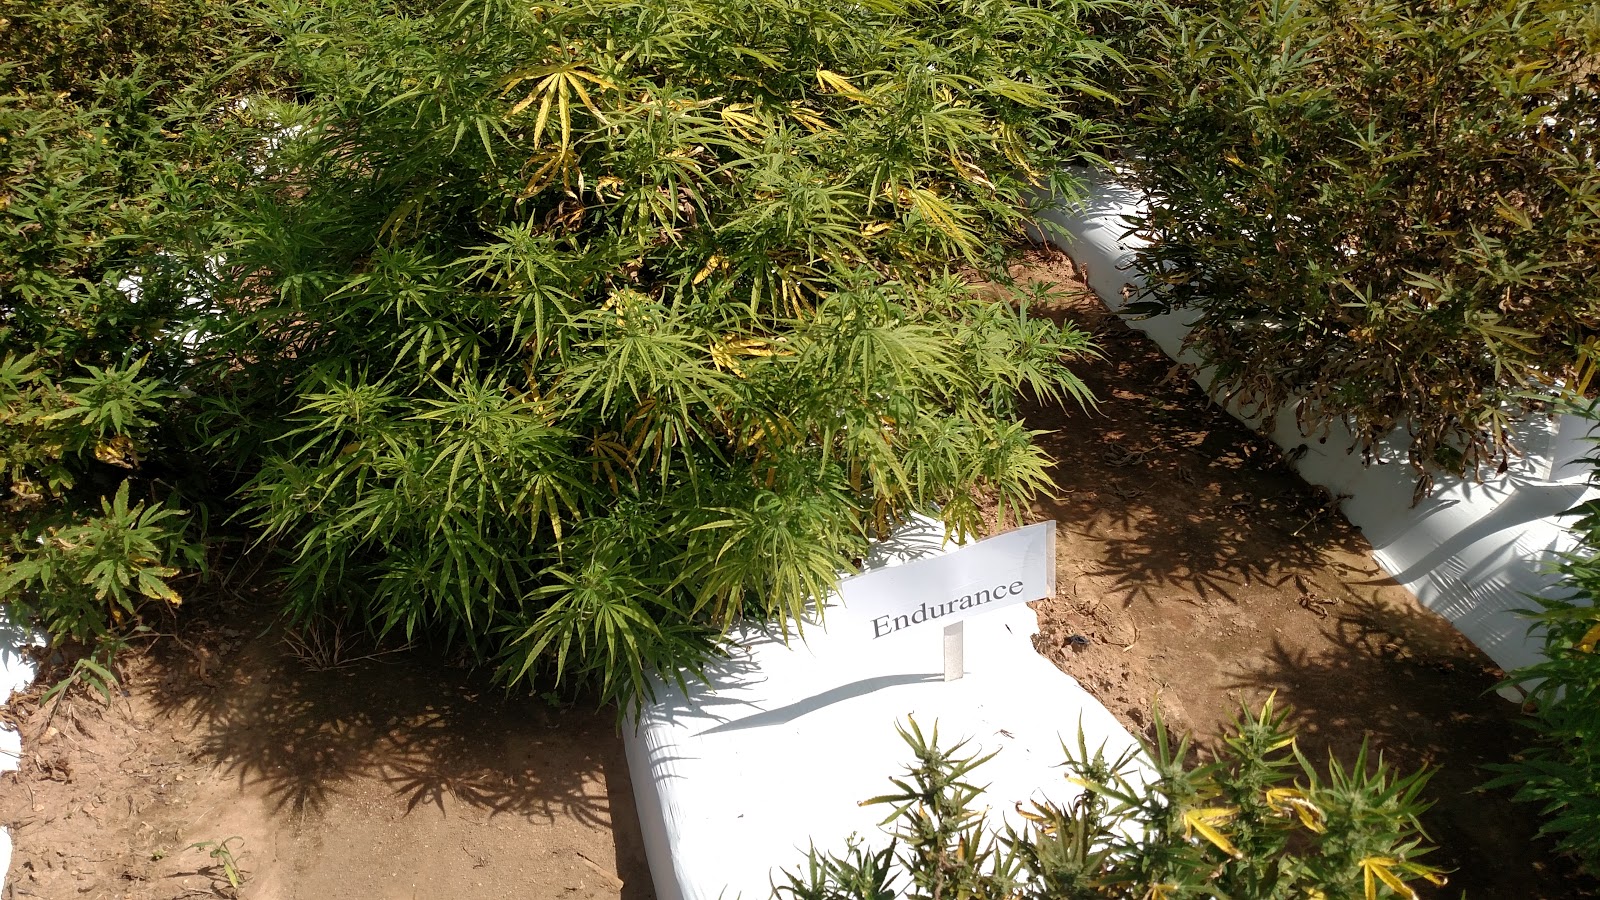 "Endurance" hemp plant showing signs of Boron deficiency